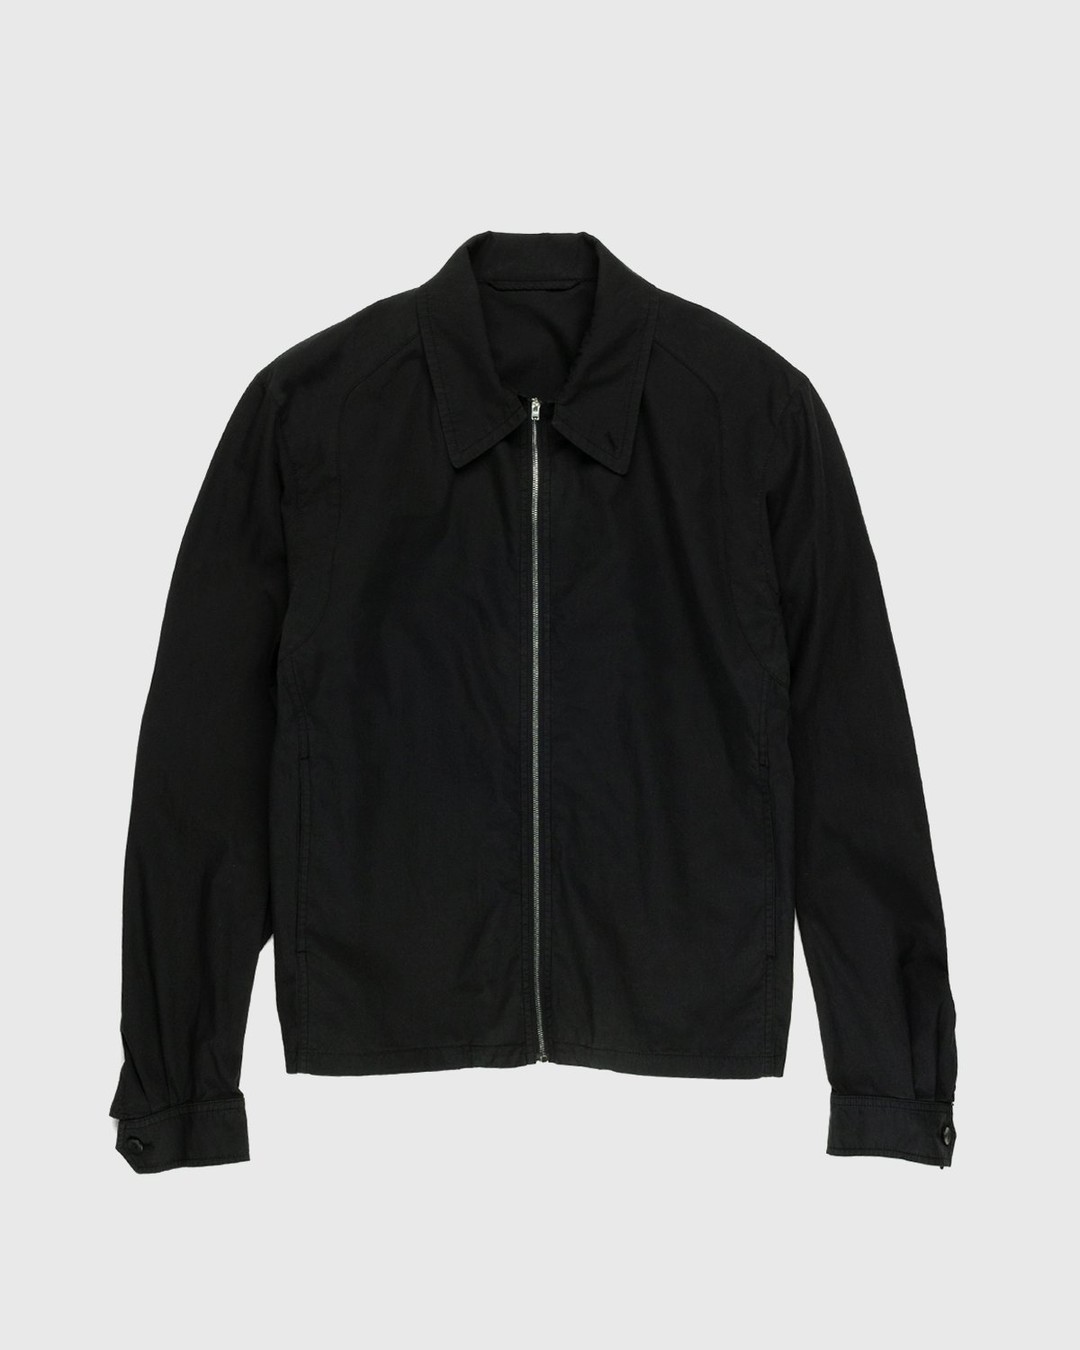 Lemaire – Shirt Blouson Black - Longsleeve Shirts - Black - Image 1